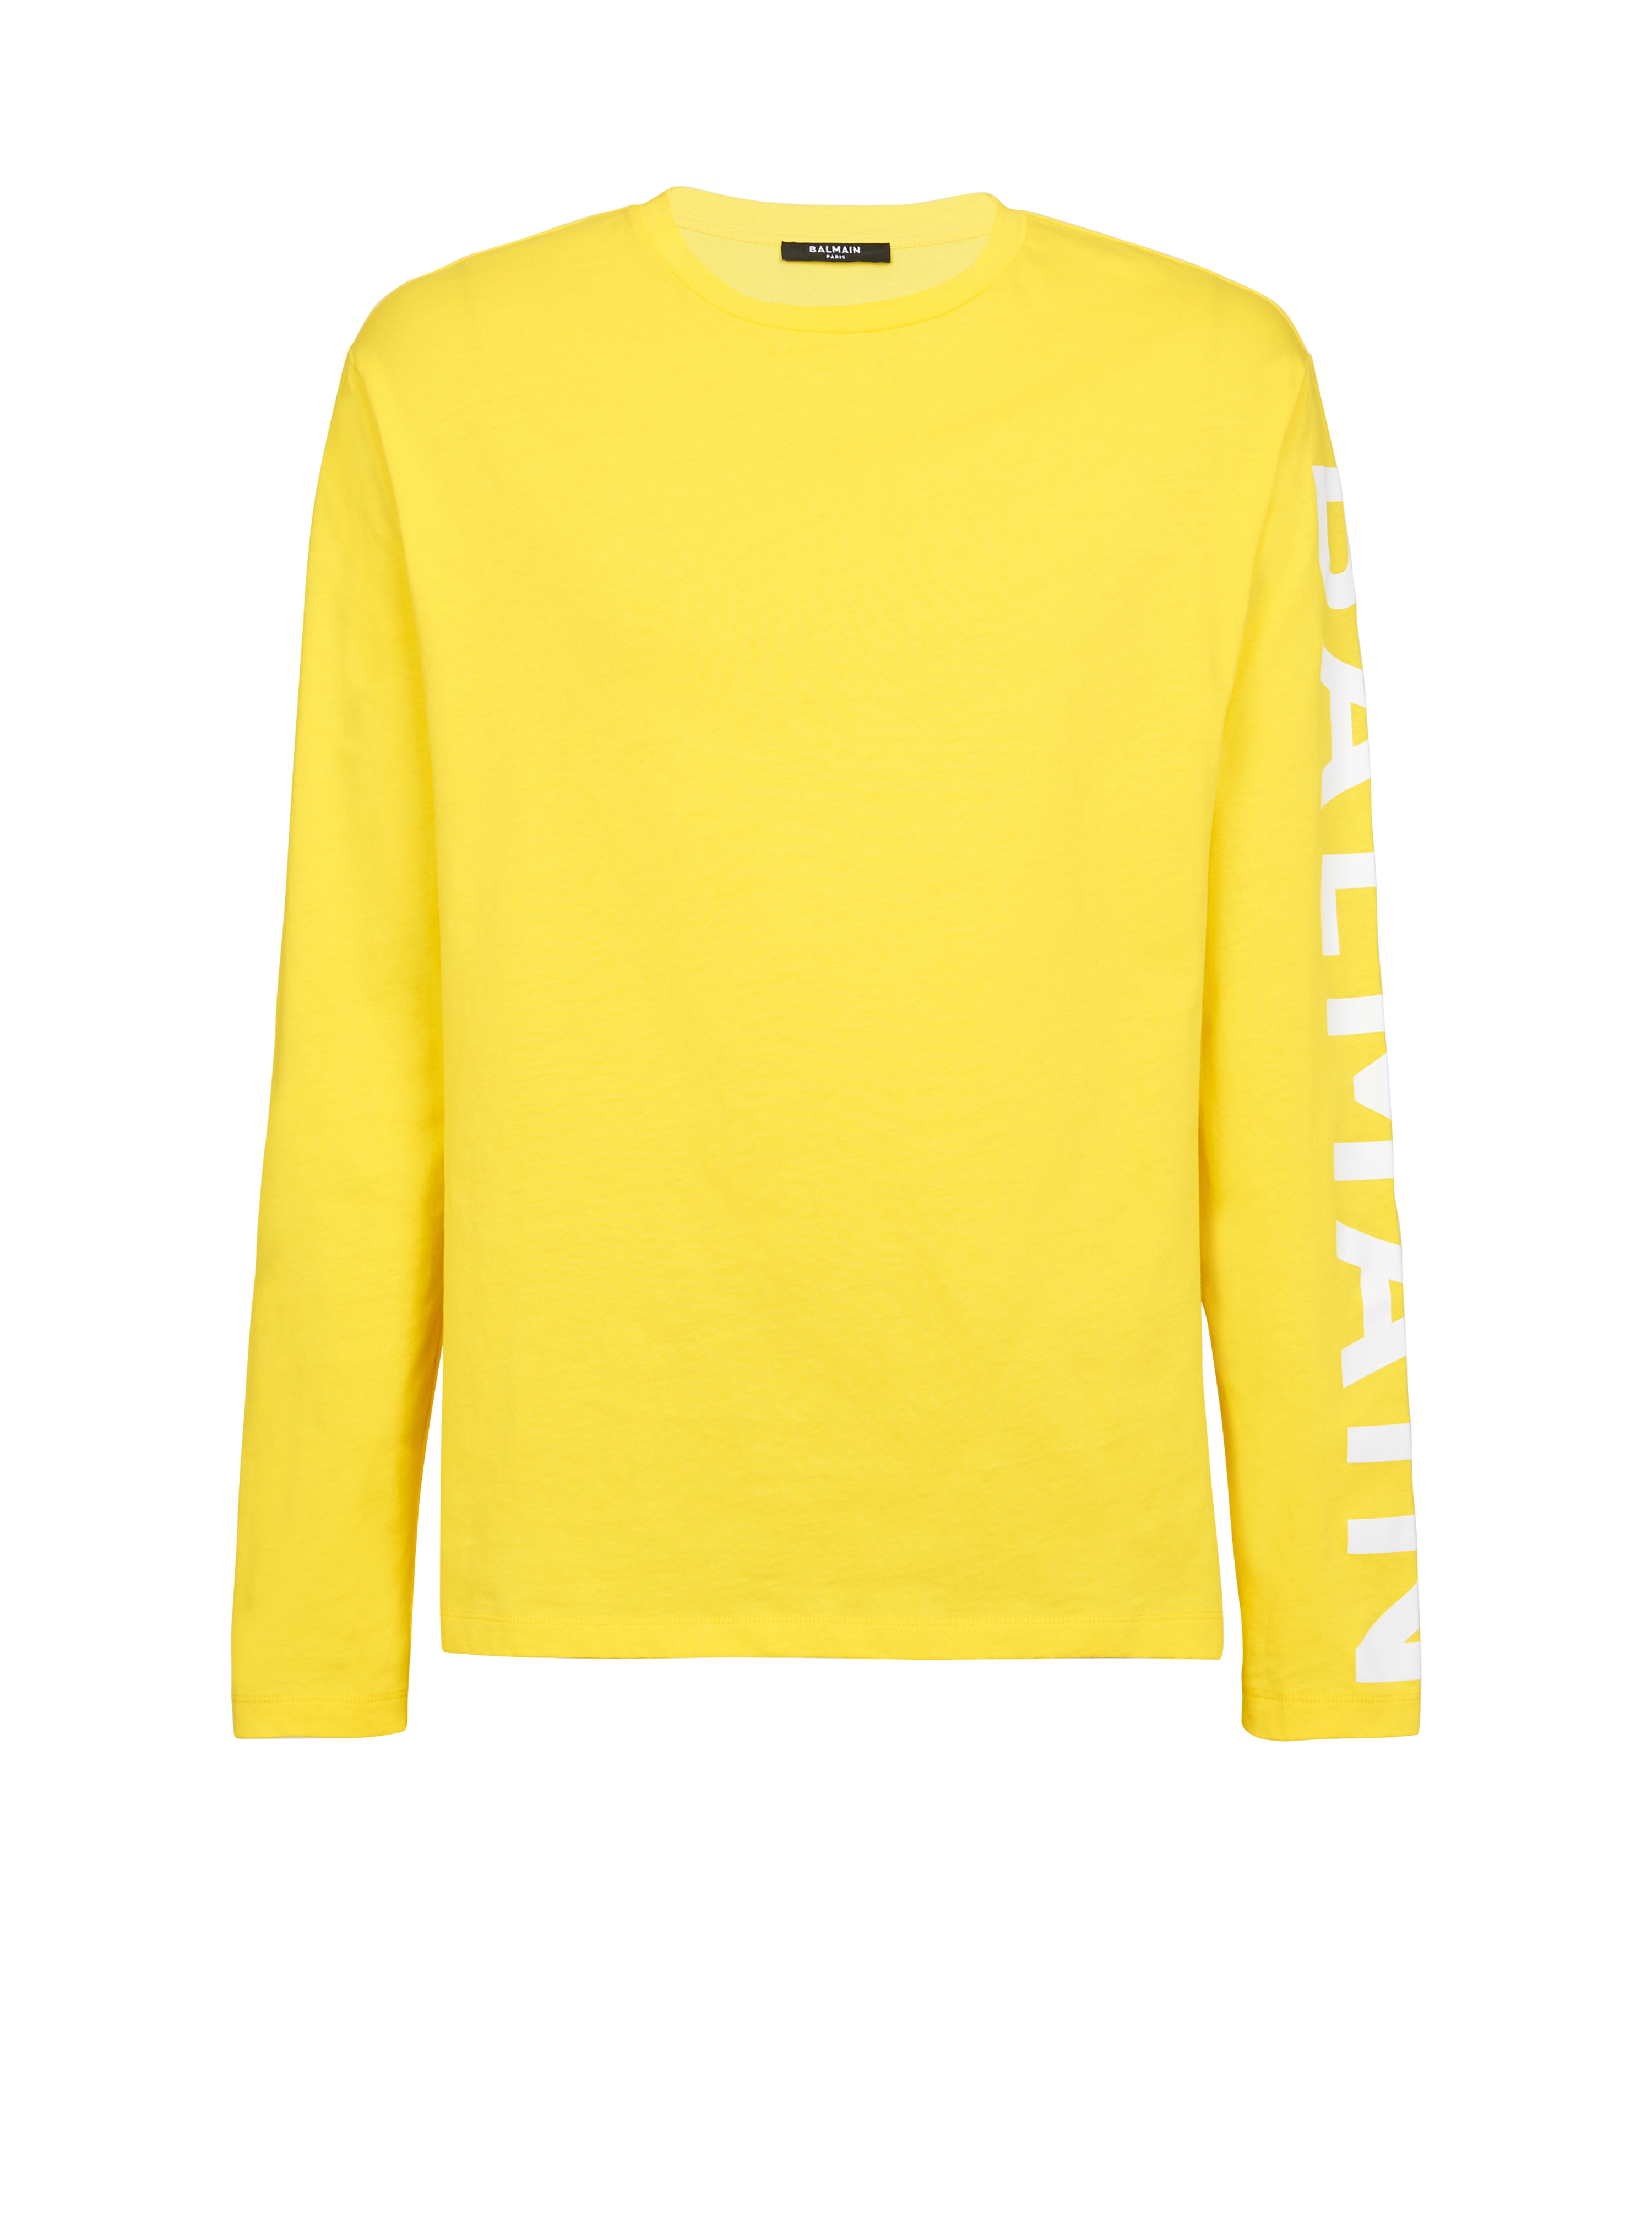 Cotton T-shirt with Balmain logo, yellow